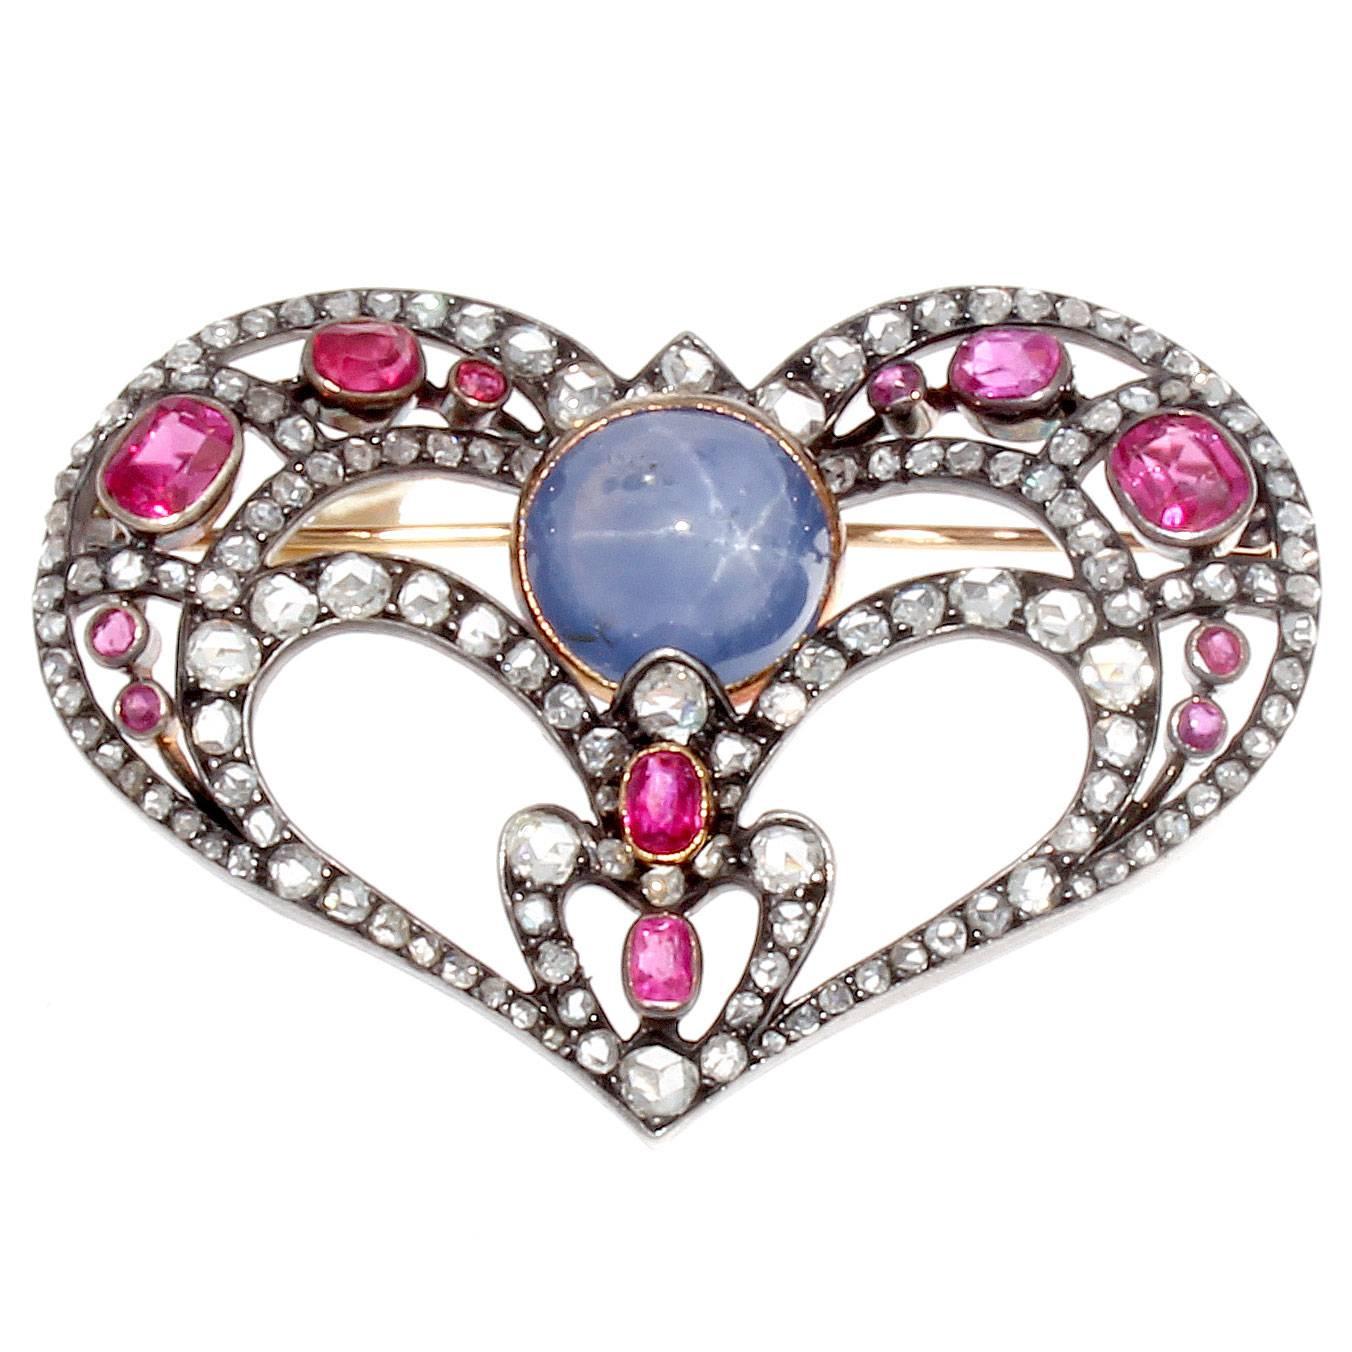 Antique Sapphire Diamond Spinel Silver Gold Heart Brooch